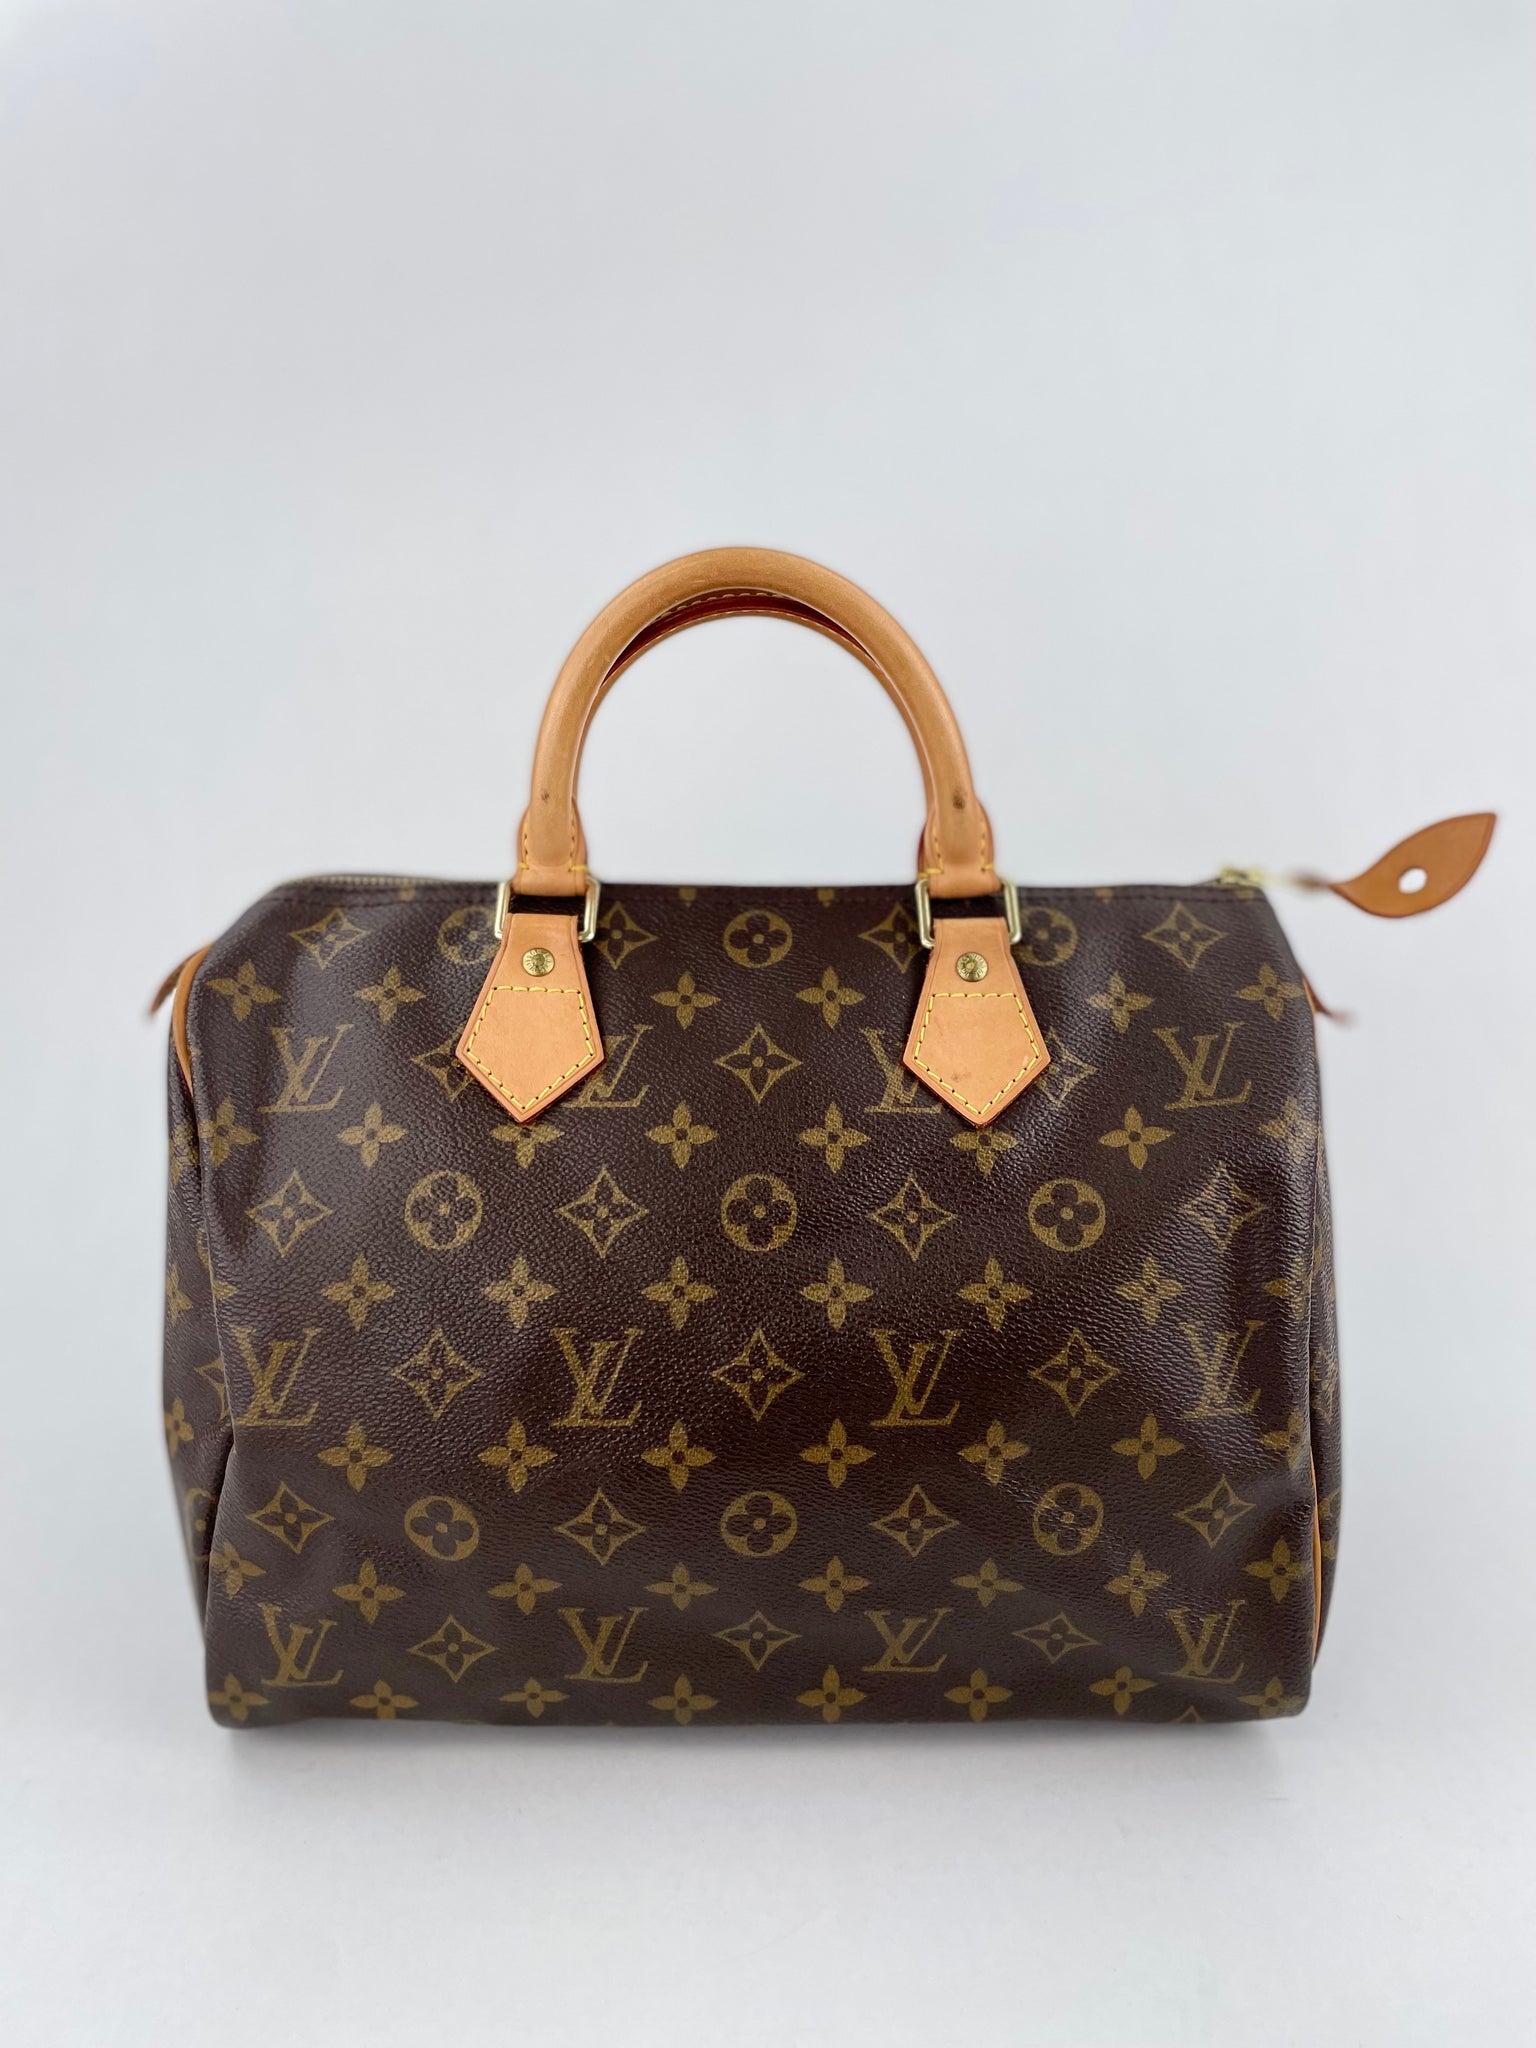 PRELOVED Louis Vuitton Monogram Speedy 30 Bag TH0012 080123